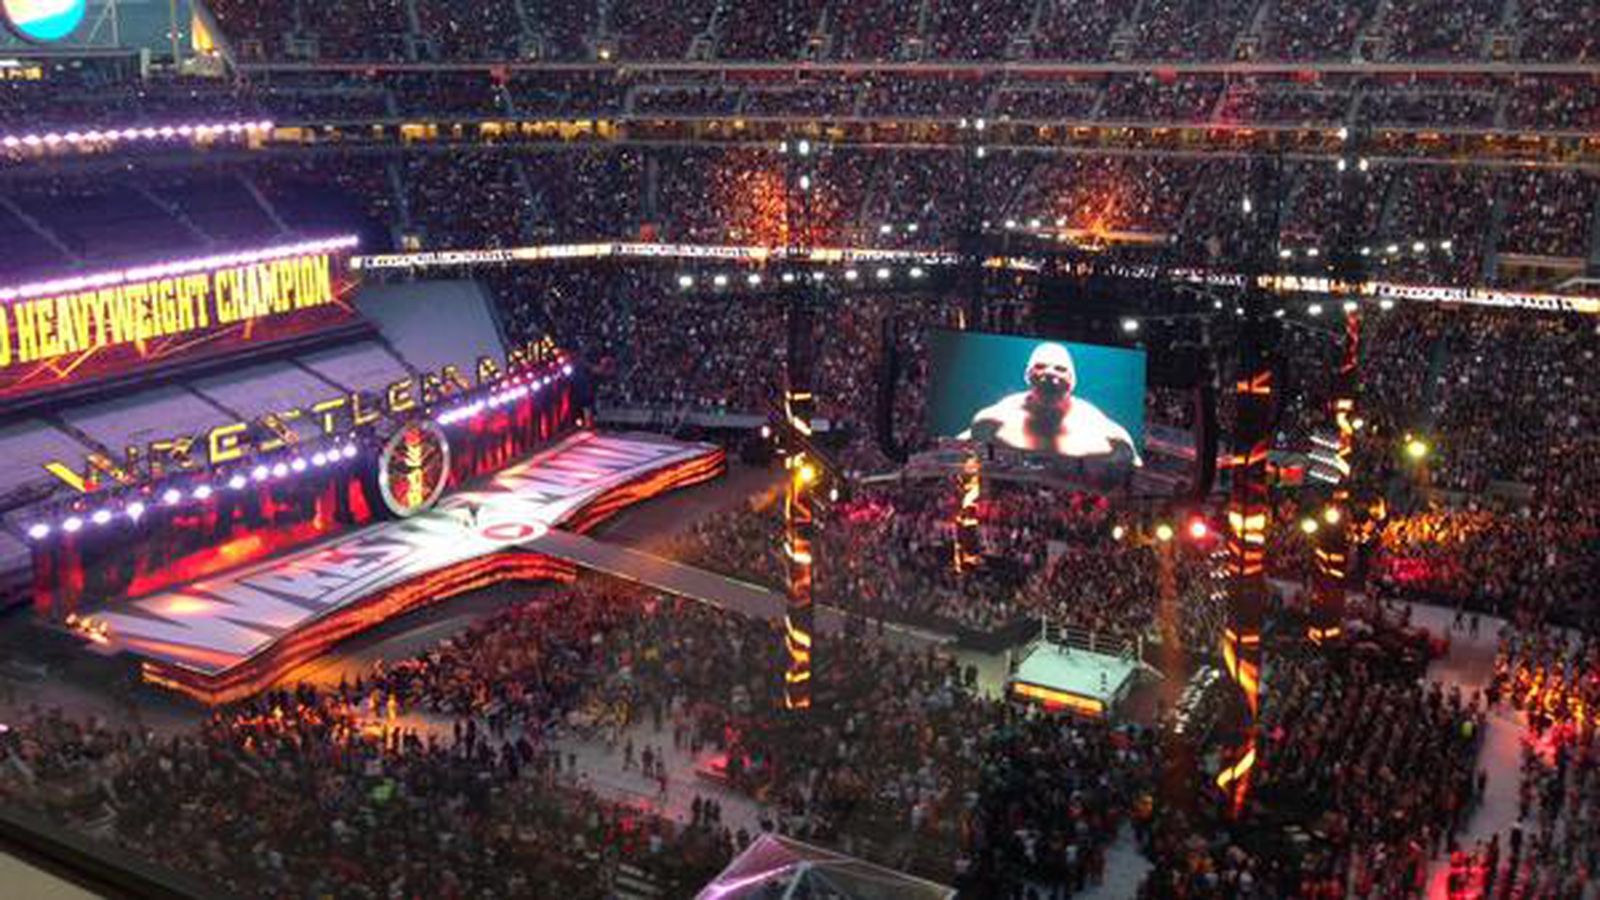 GFW's Jeff Jarrett WrestleMania 31 MVPs and complete event analysis